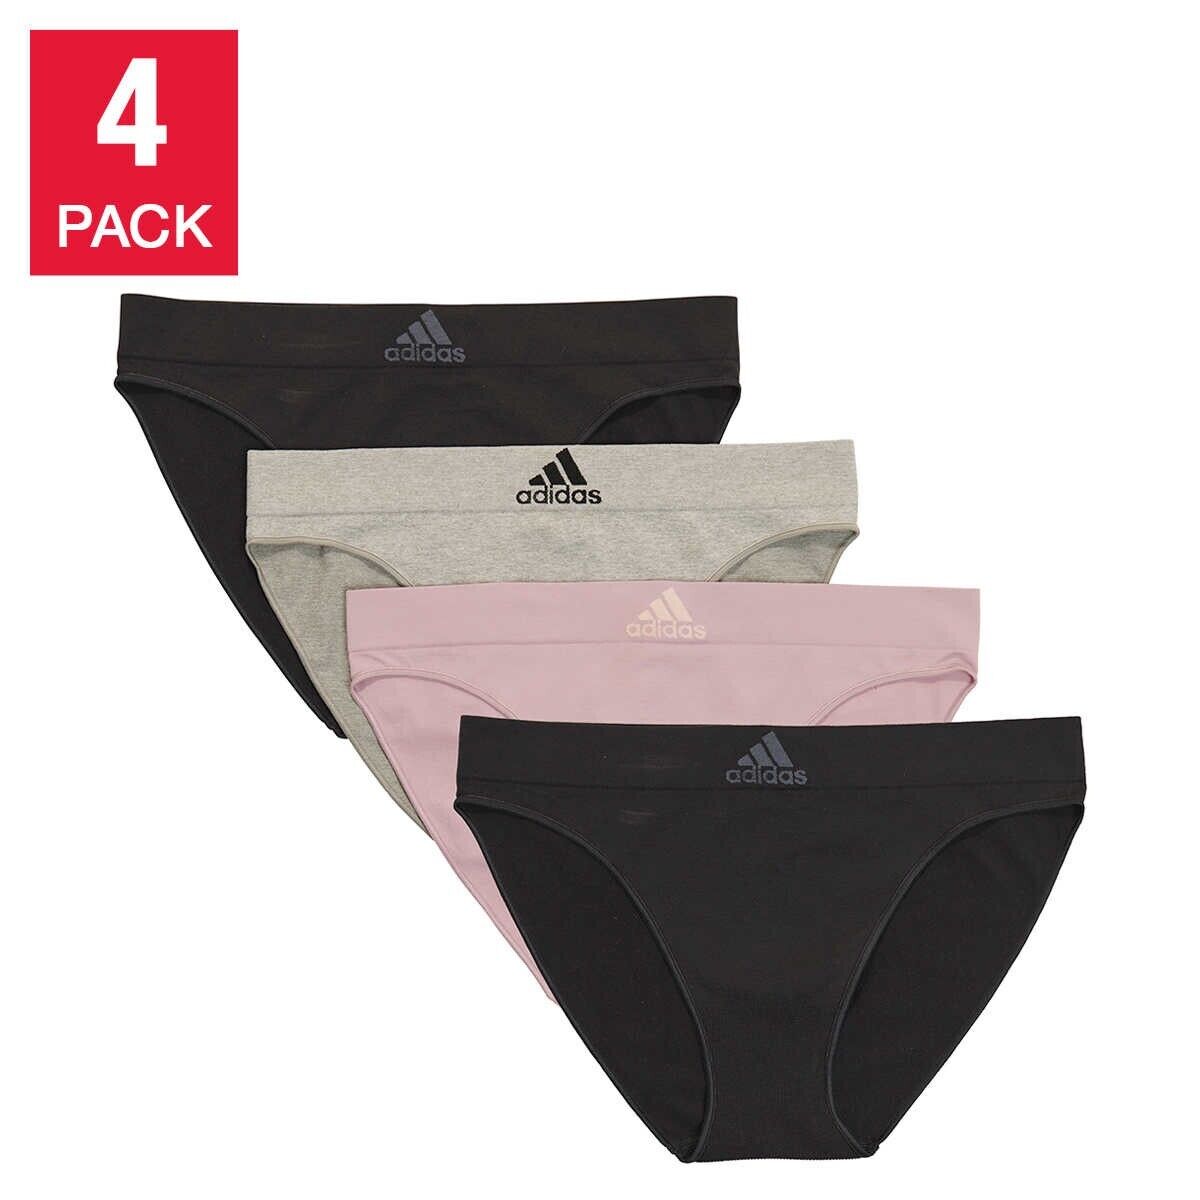 adidas women's bikini briefs 2-pack - Cotton Stretch, 19,95 €